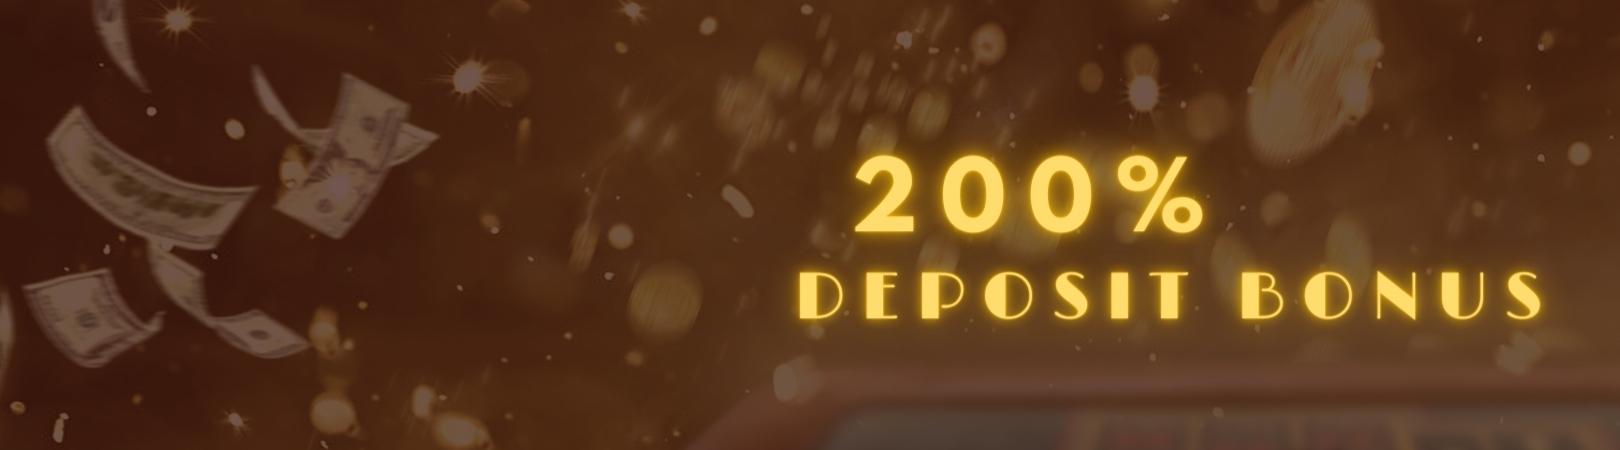 200% deposit bonus img